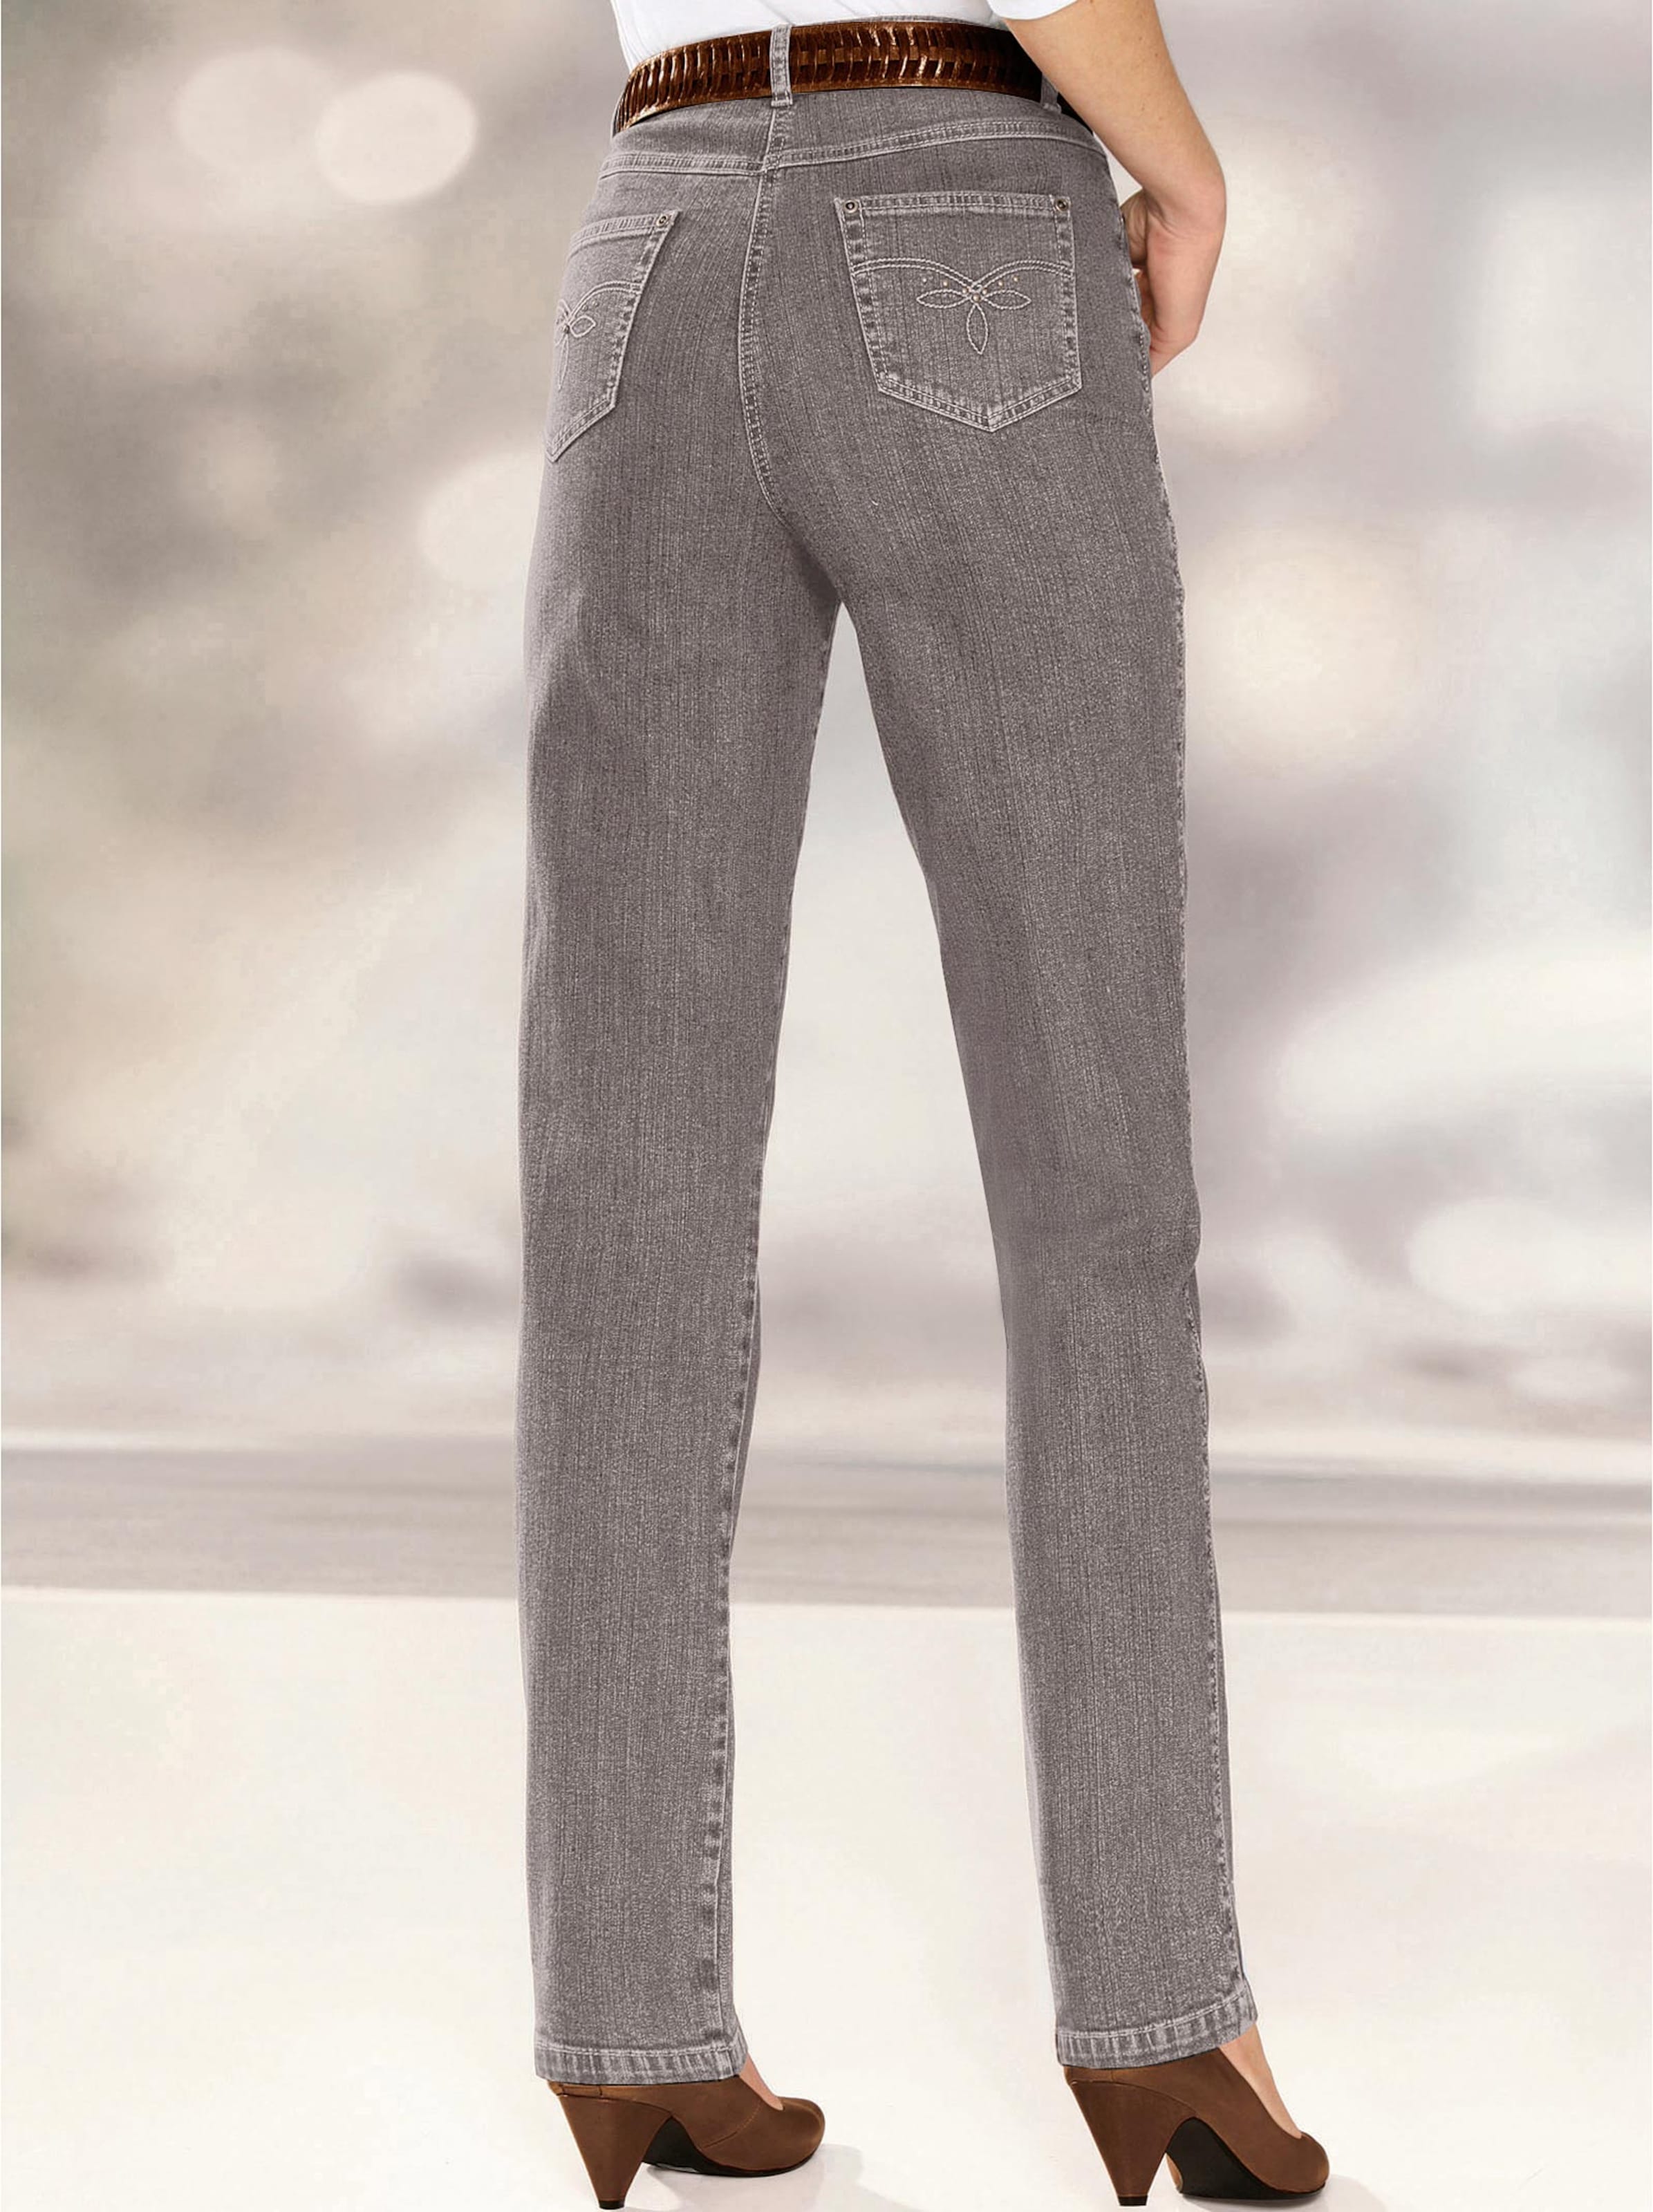 Damenmode Jeans 5-Pocket-Jeans in taupe-denim 